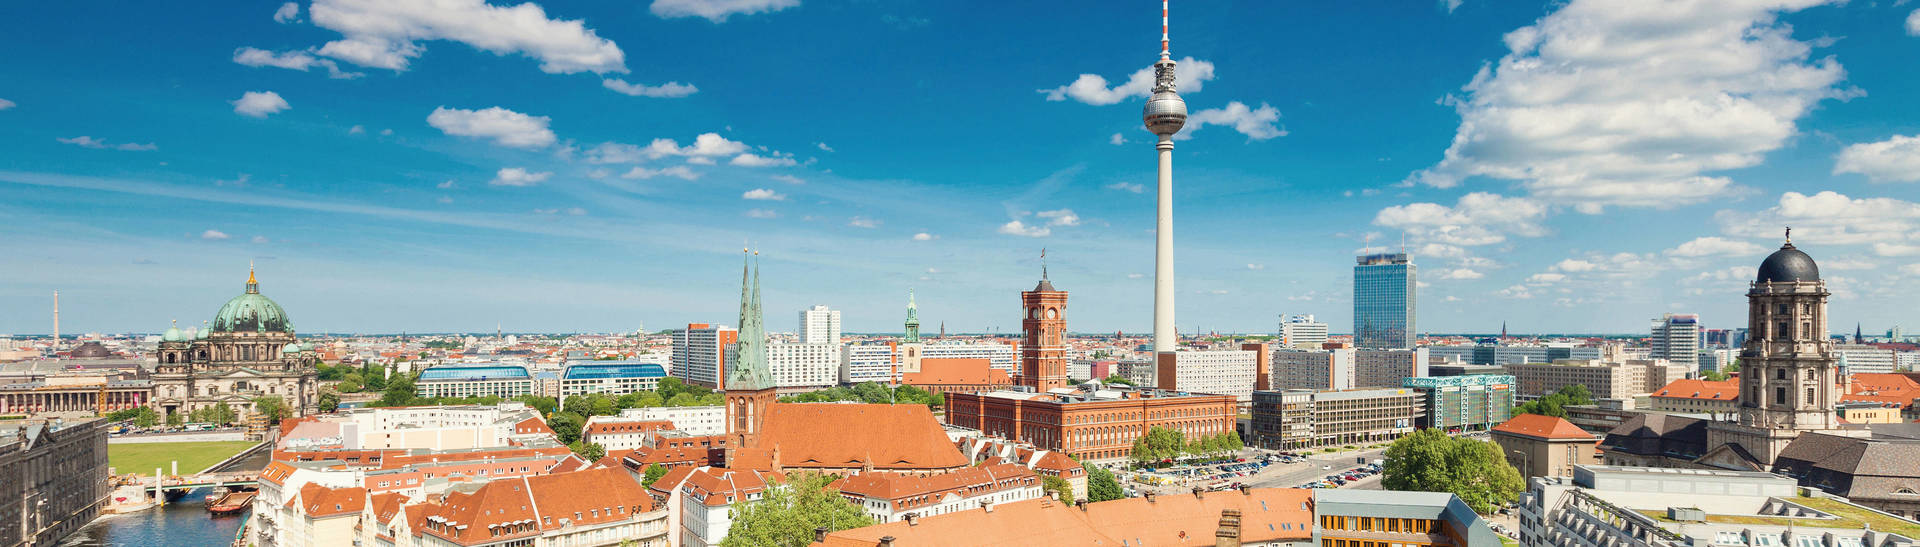 H4 Hotel Berlin Alexanderplatz – in the heart of the city  - Official website